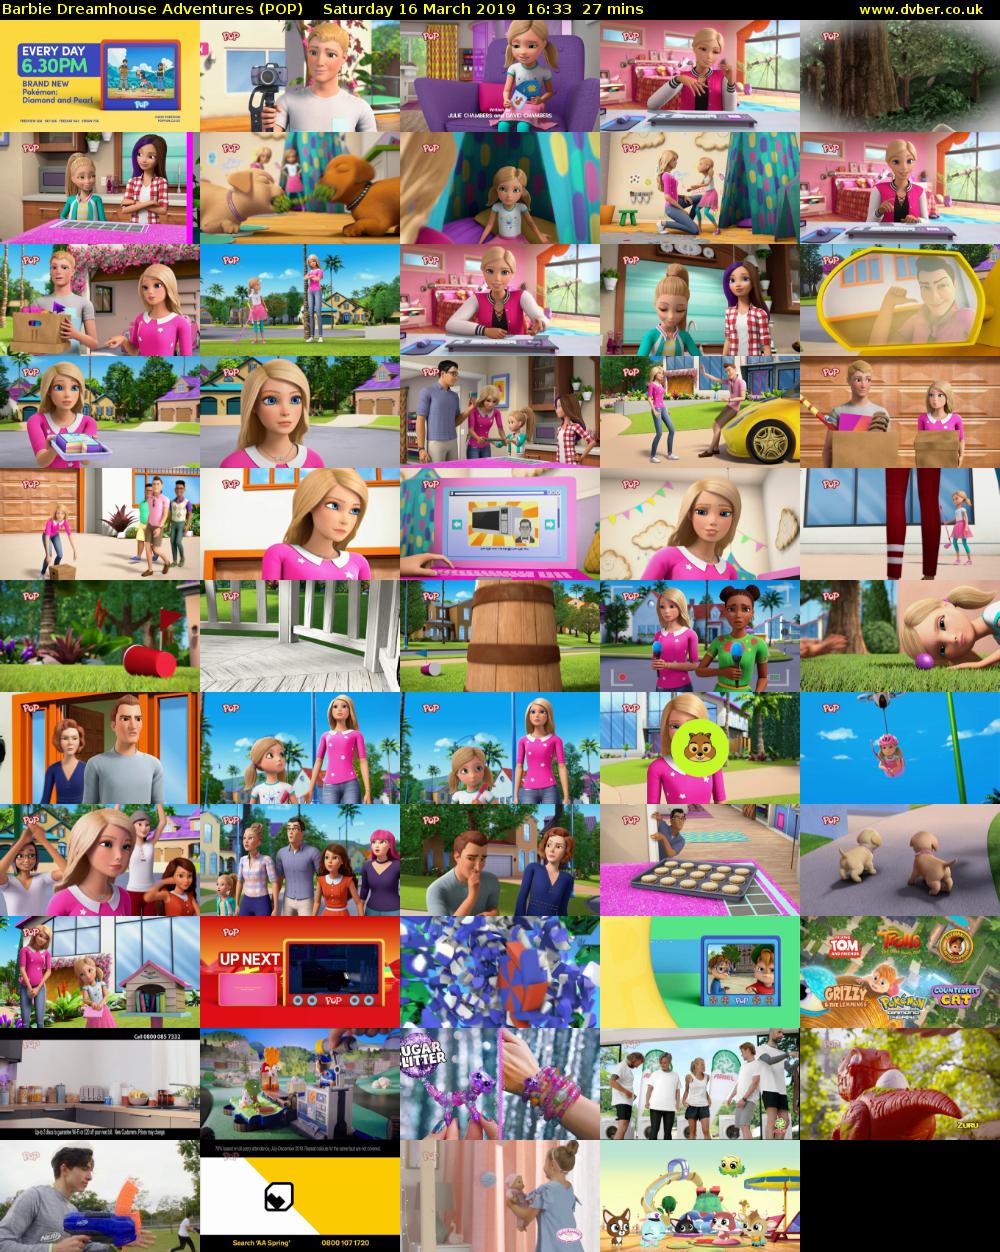 Barbie Dreamhouse Adventures (POP) Saturday 16 March 2019 16:33 - 17:00